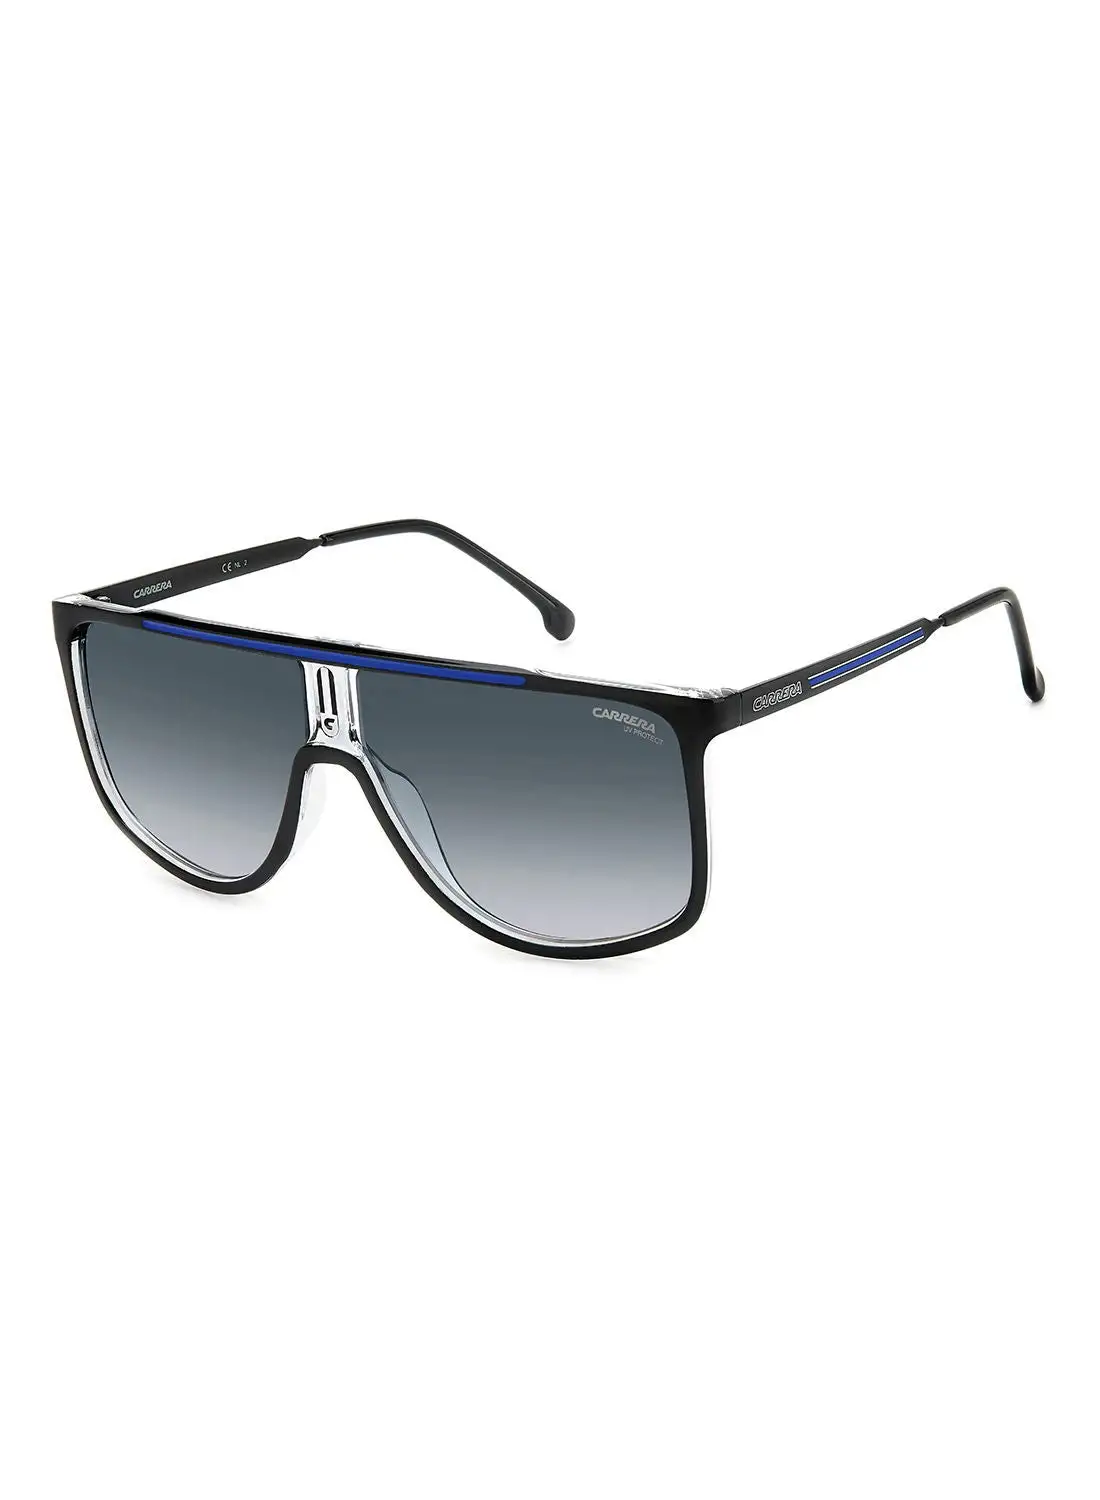 Carrera Men's UV Protection Navigator Sunglasses - Carrera 1056/S Black/Blue 61 - Lens Size: 61 Mm